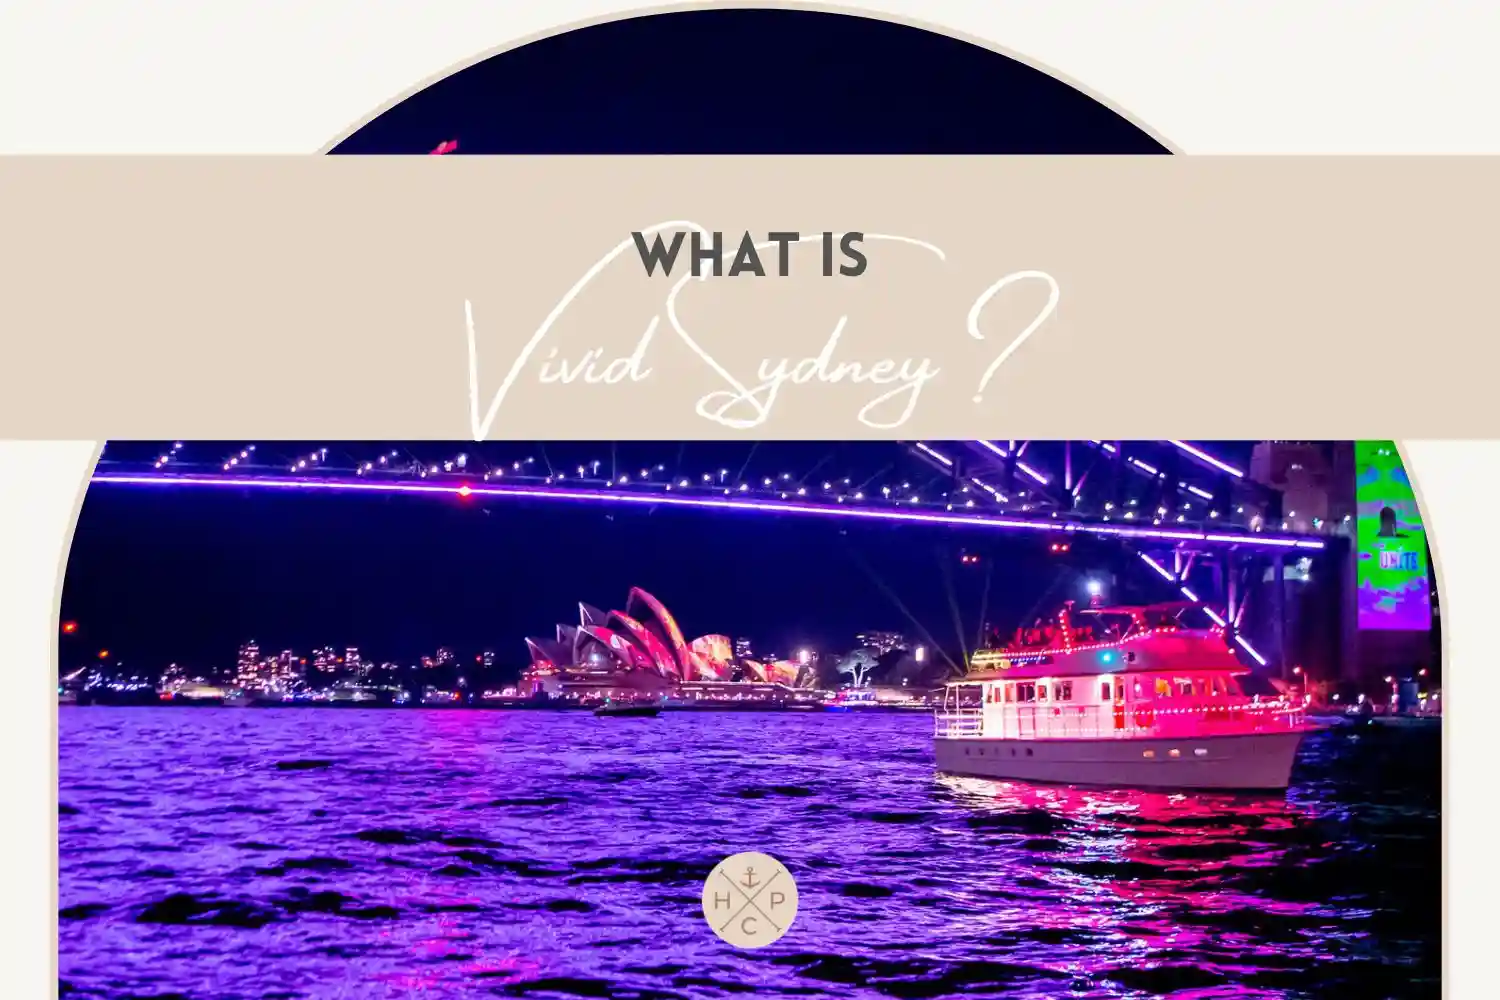 Vivid Sydney - experience the festival of lights